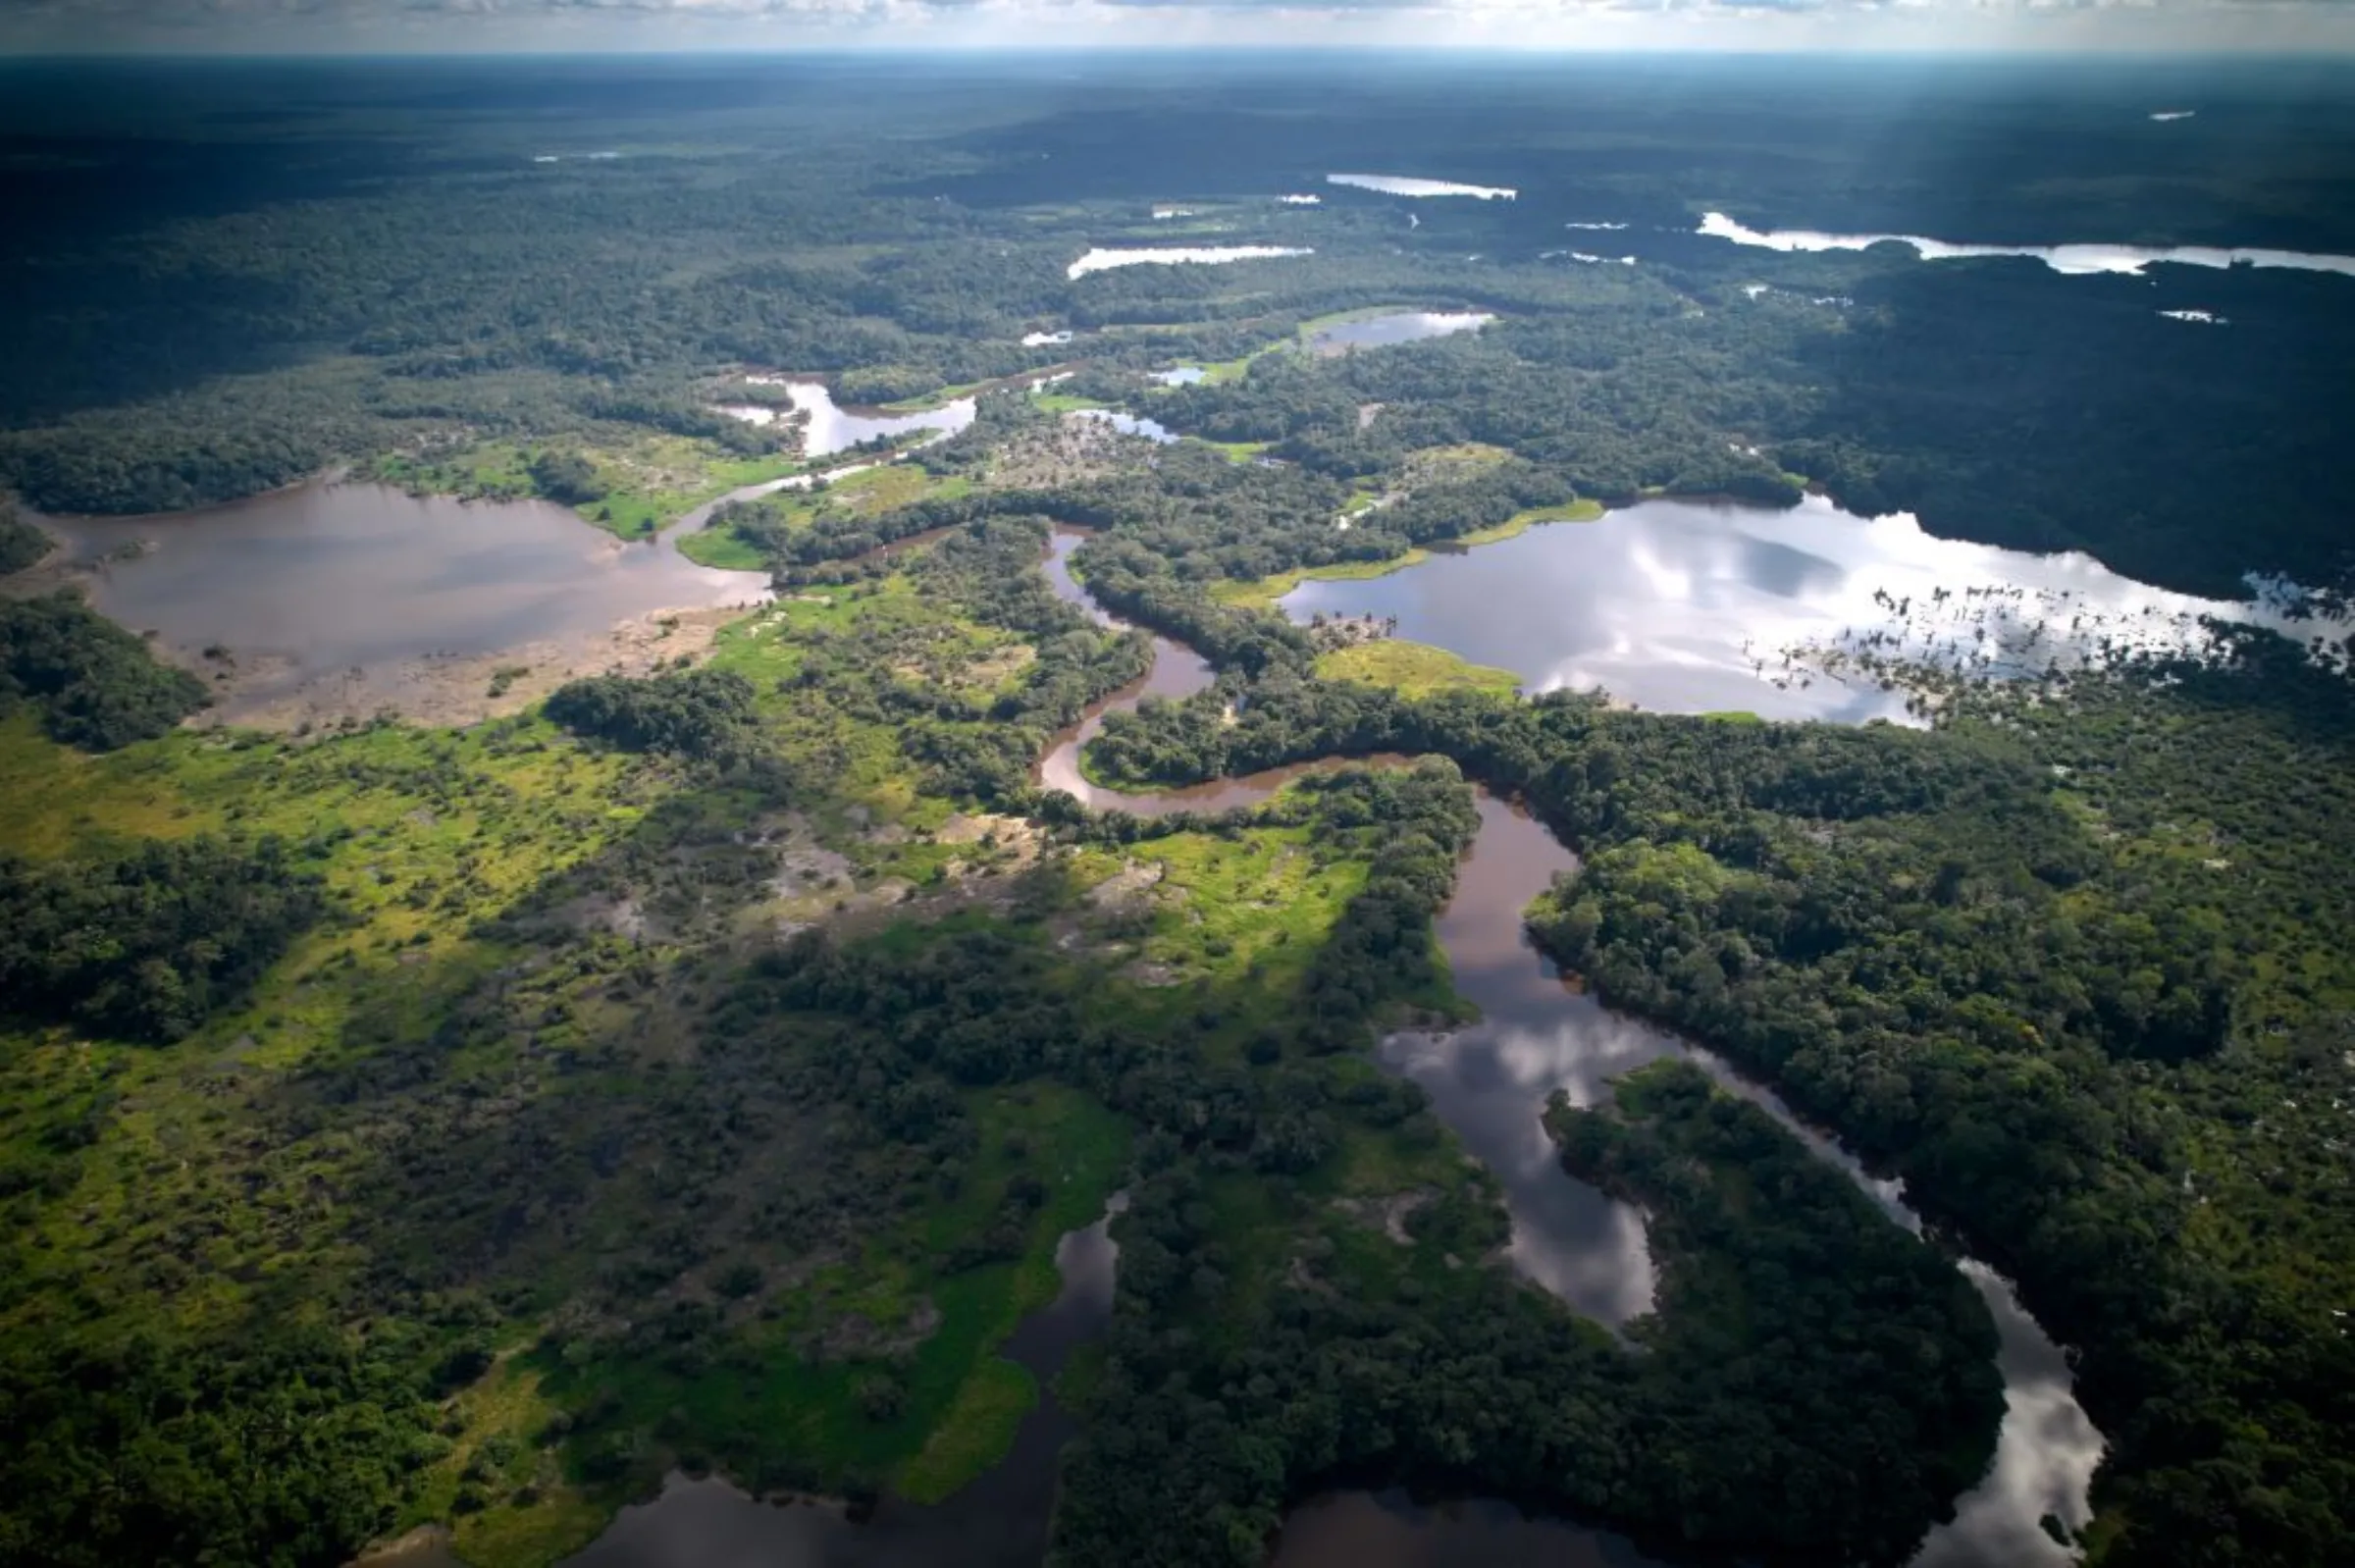 The ancestral heartland of the Siekopai people located along the Lagartococha River in Ecuador's Amazon rainforest